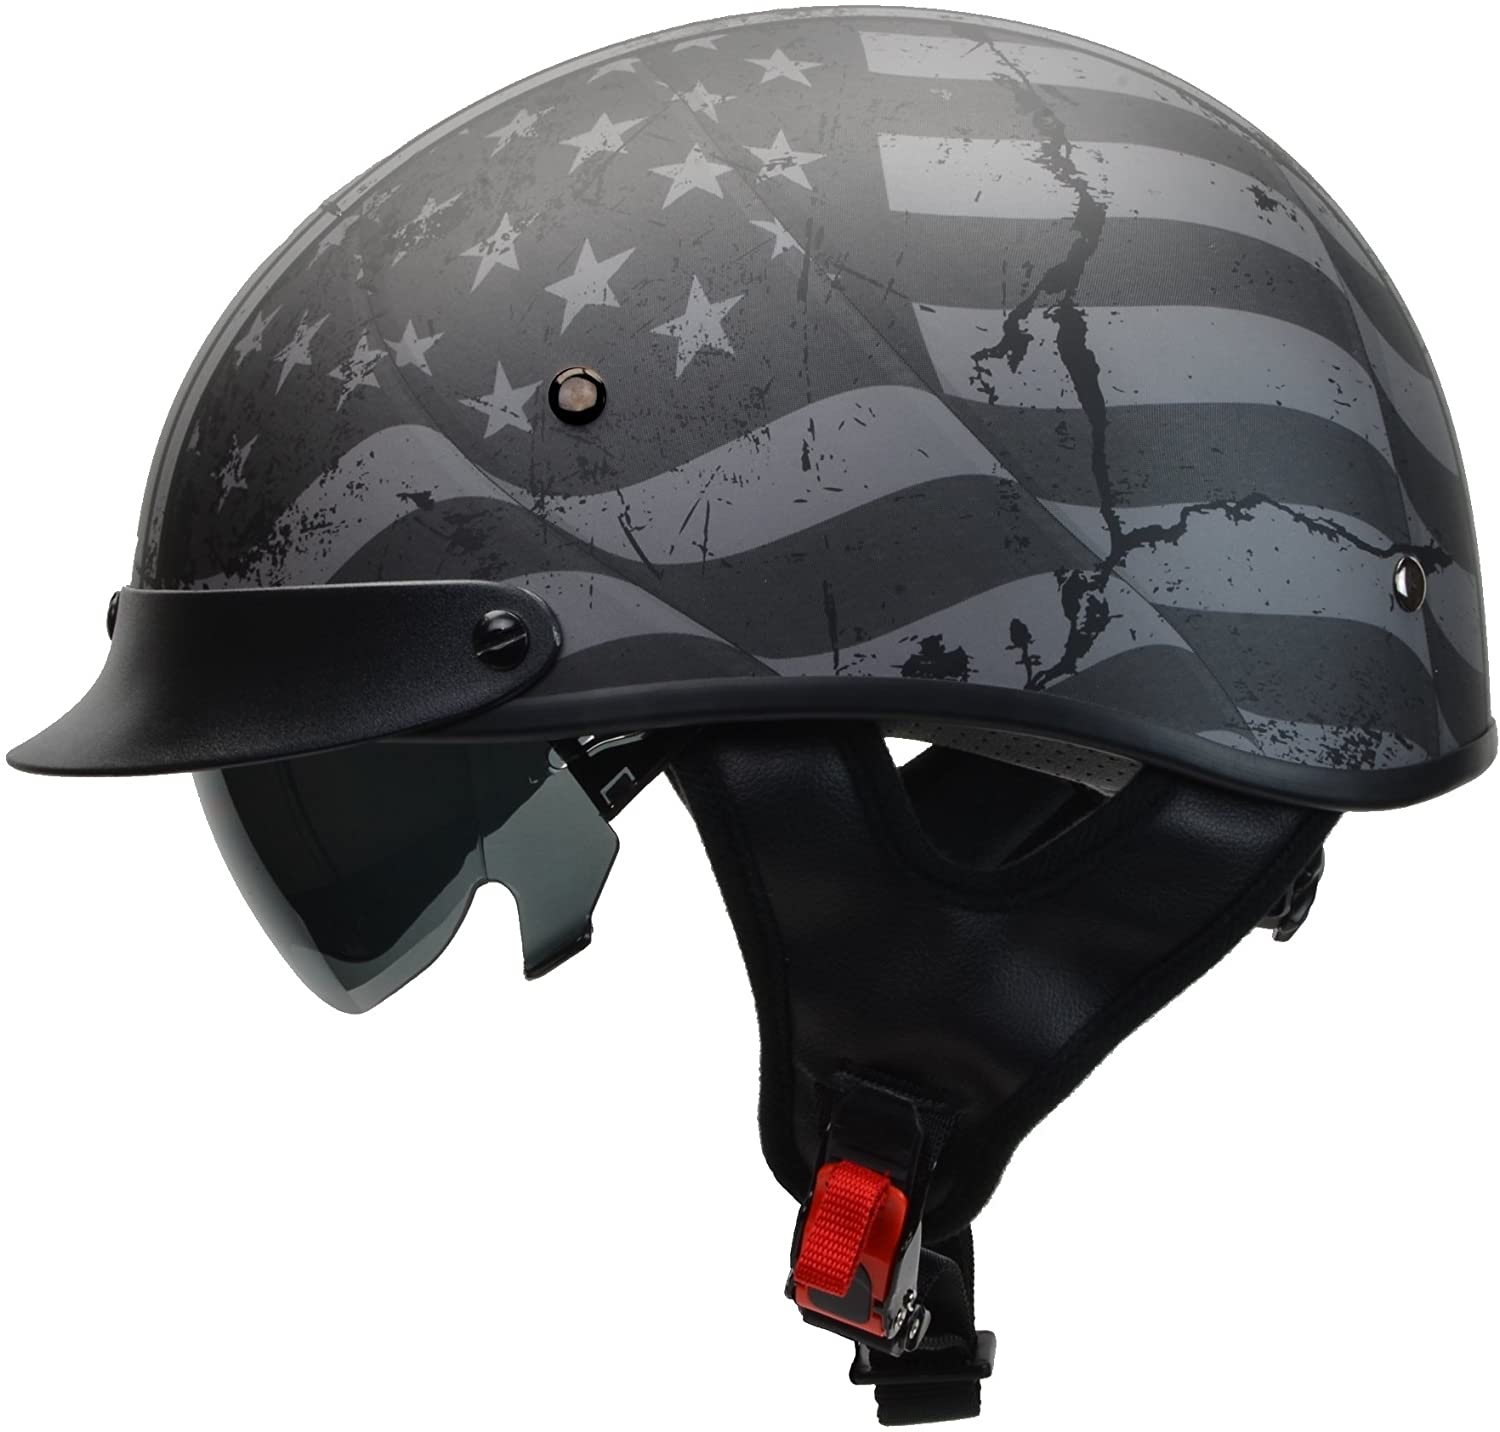 Old Skool Graphic, XL Vega Helmets X390 Retro Open Face Motorcycle Helmet w/Sunshield Unisex-Adult powersports 